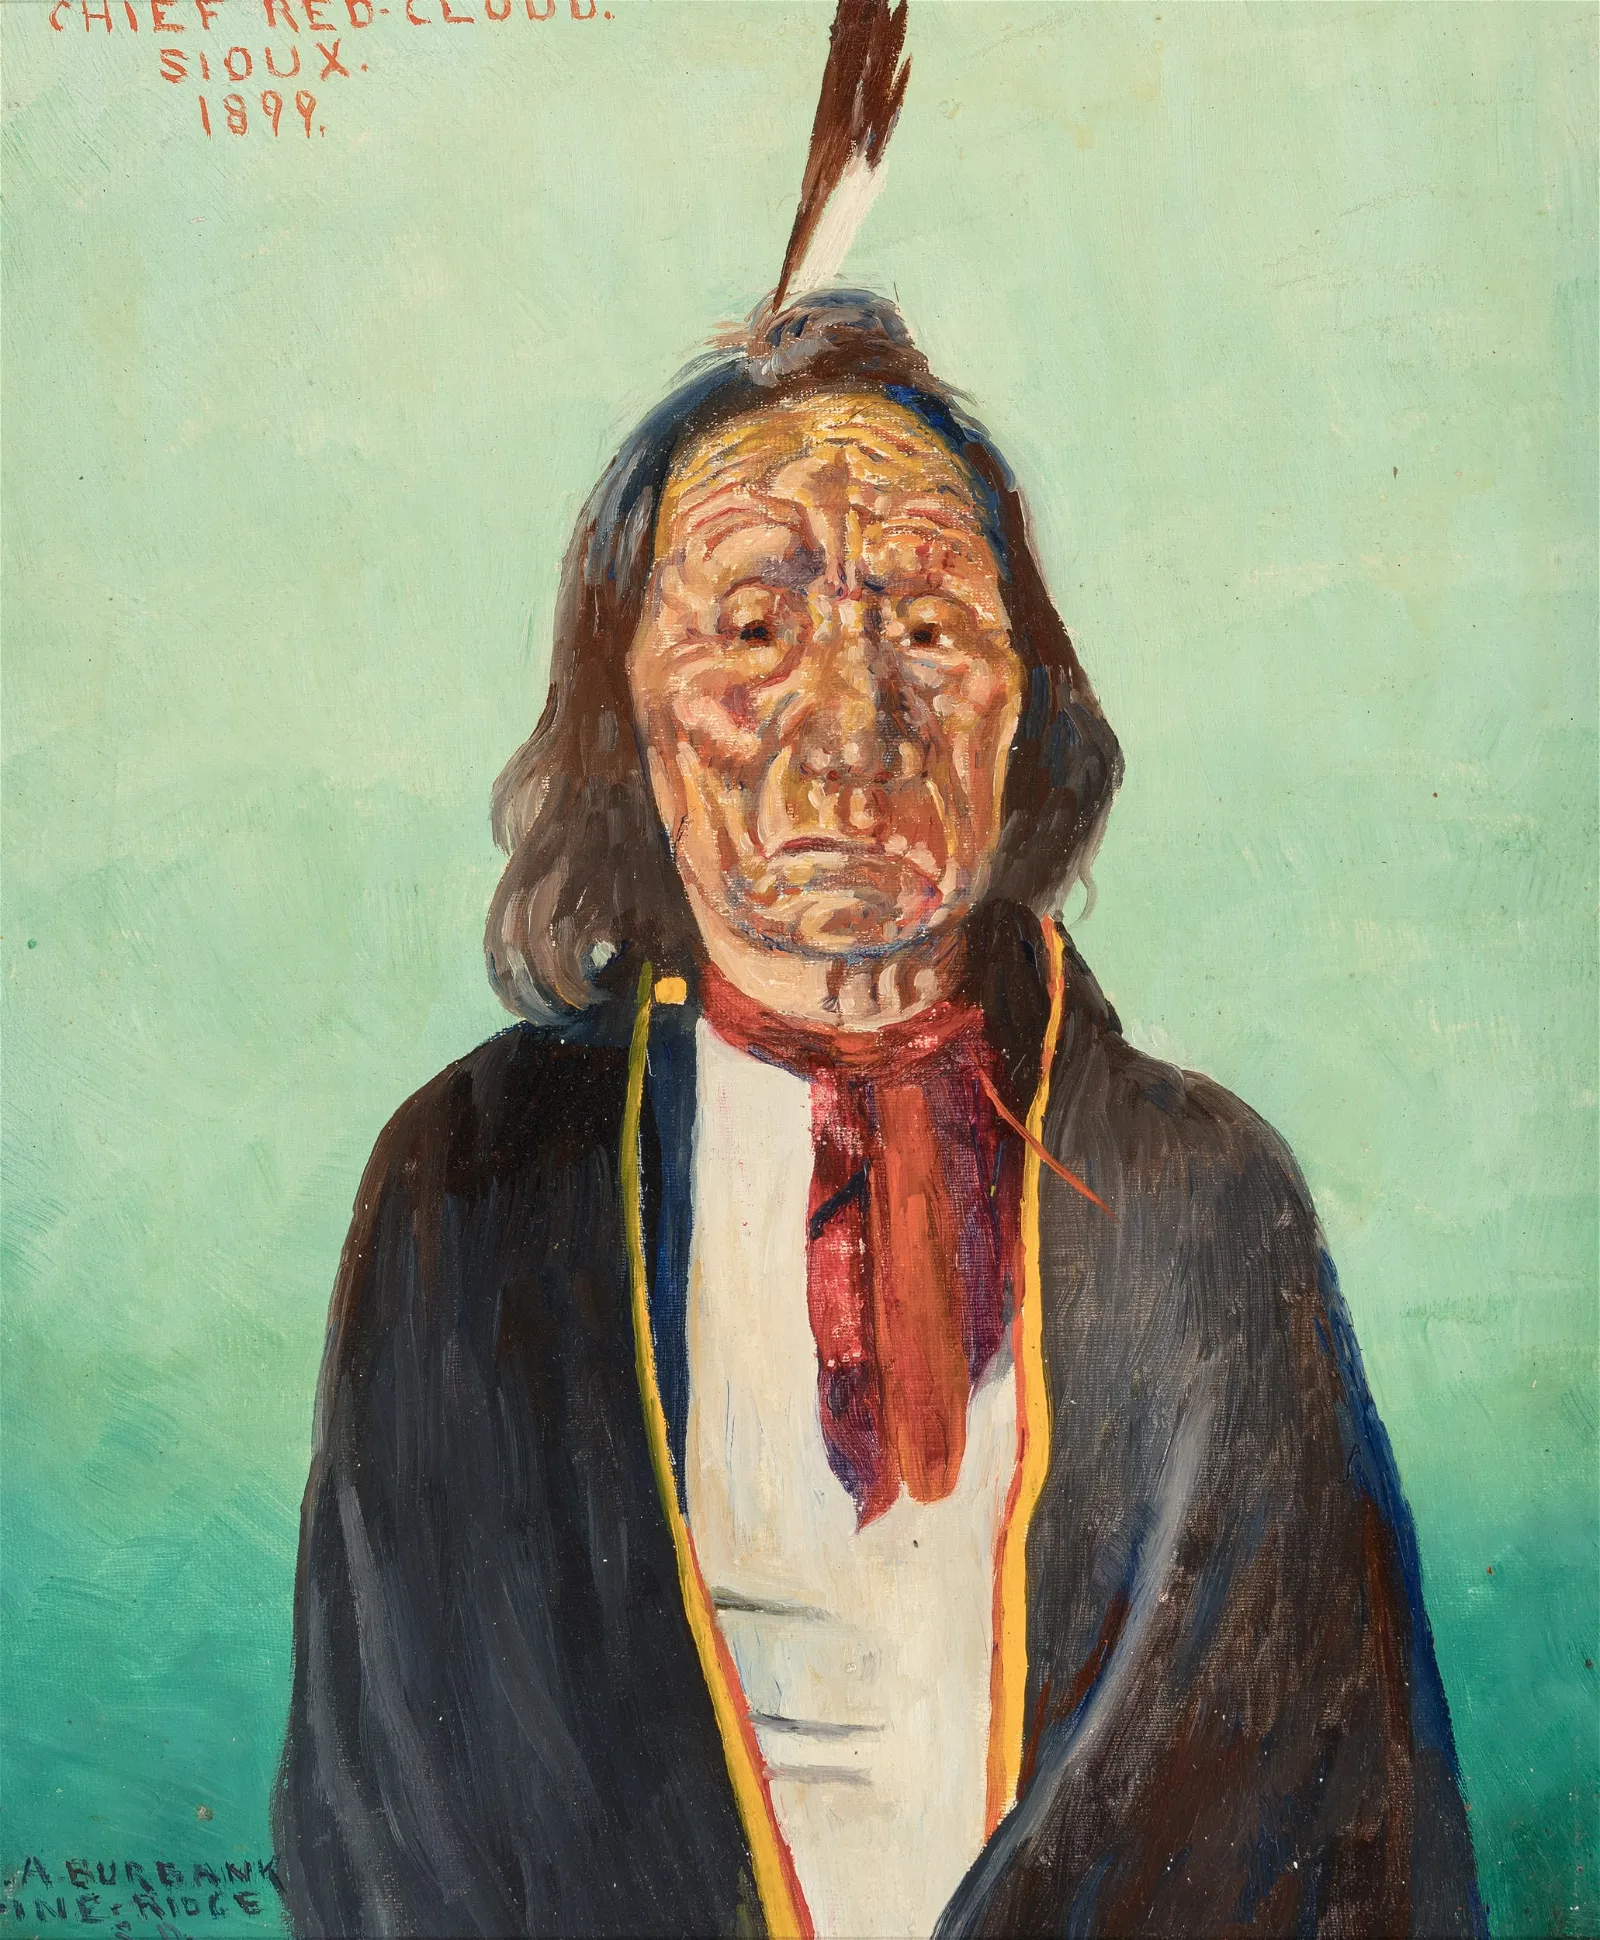 Elbridge Ayer Burbank – Chief Red Cloud, Sioux